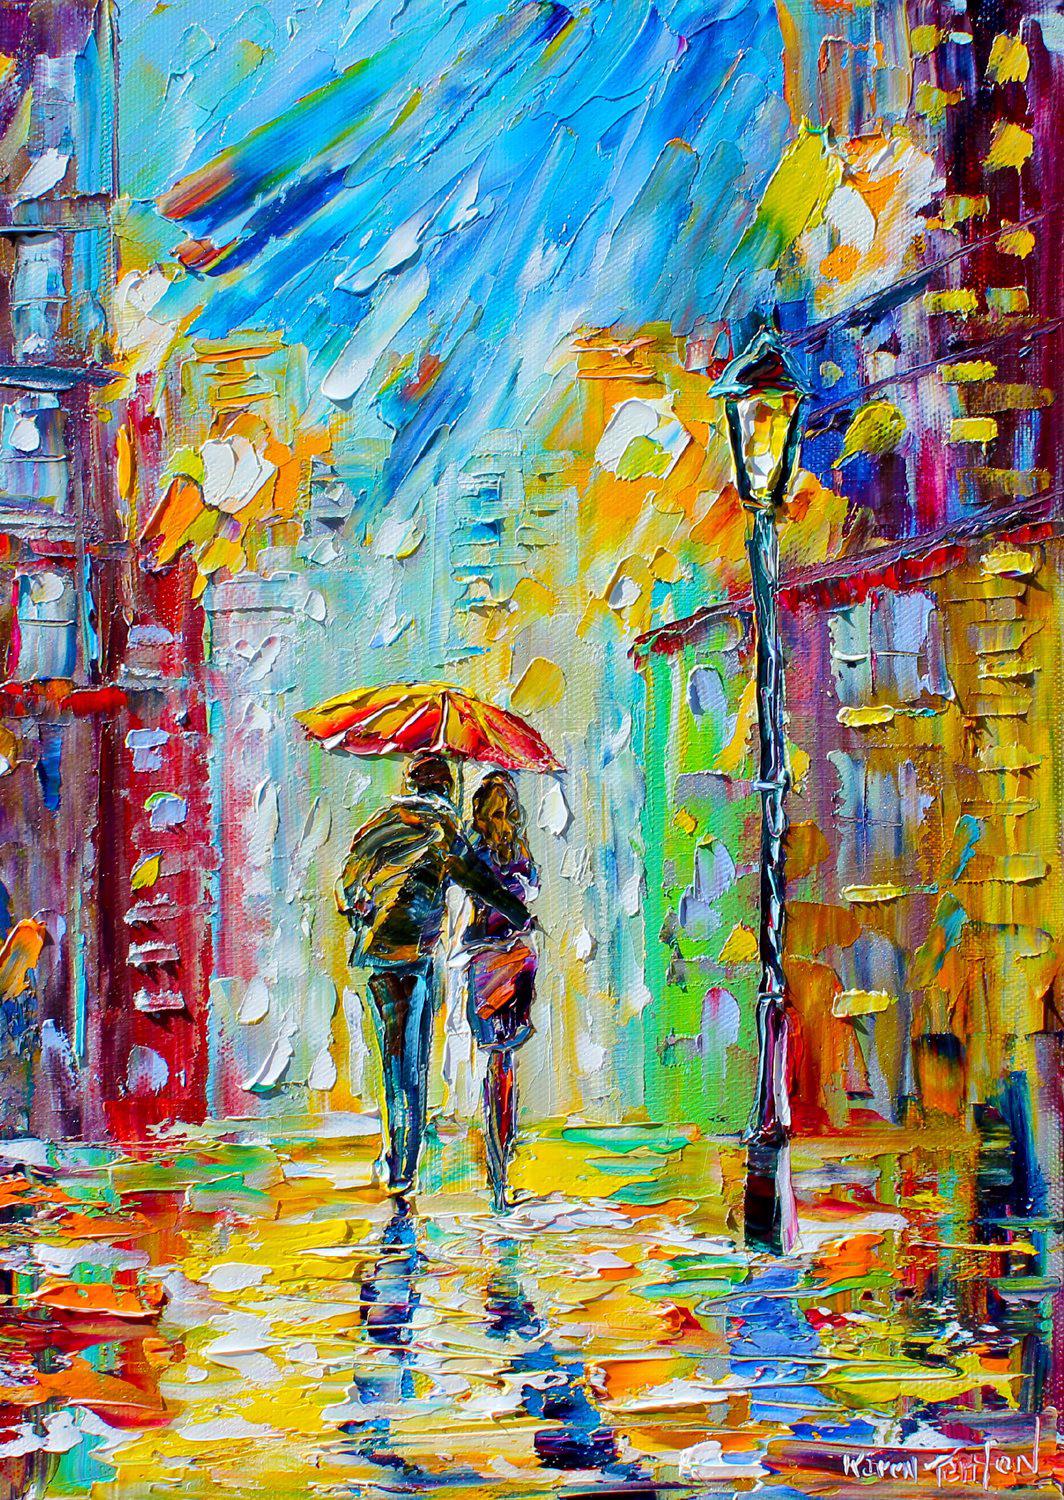 Puzzle Rainy Romance in the City